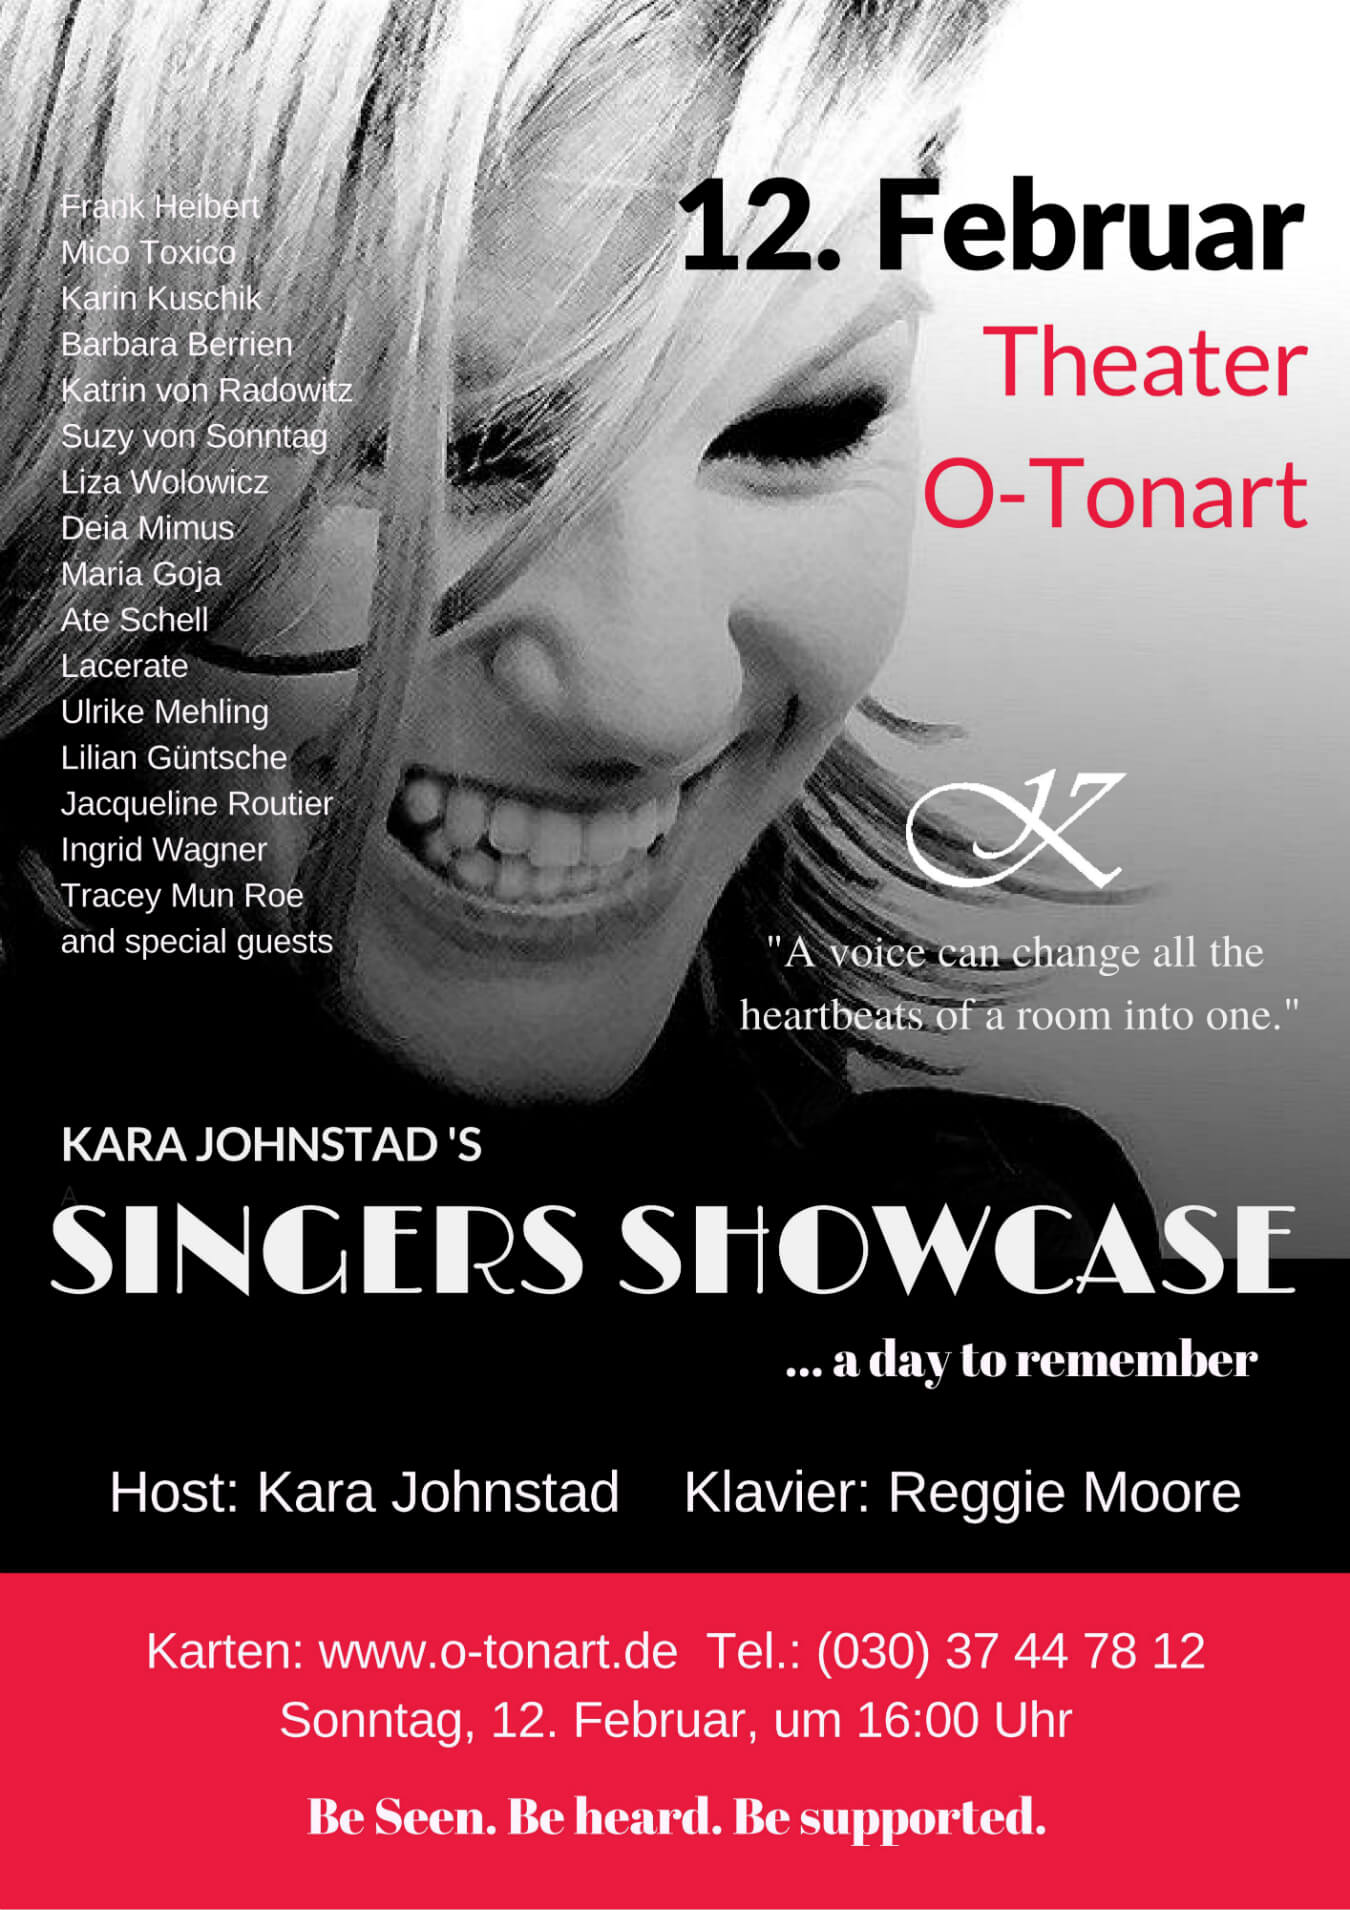 Kara Johnstad's SINGERS SHOWCASE - Feb 12, 2017